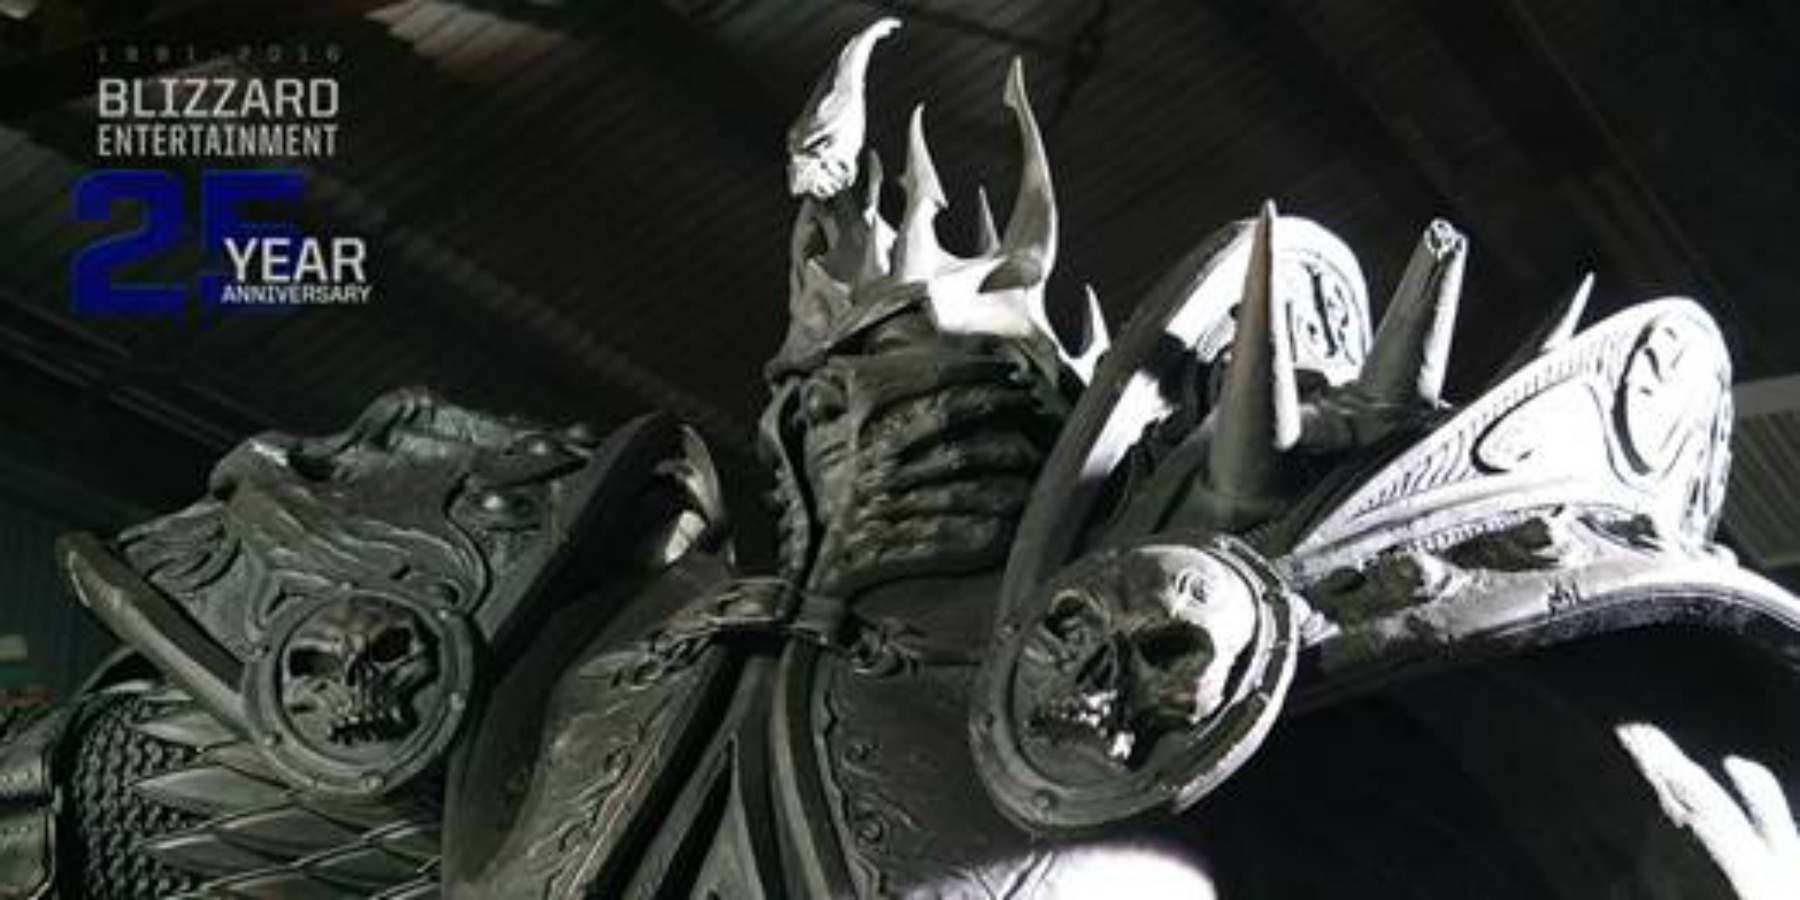 Blizzard celebra aniversario 25 con imponente estatua de Arthas